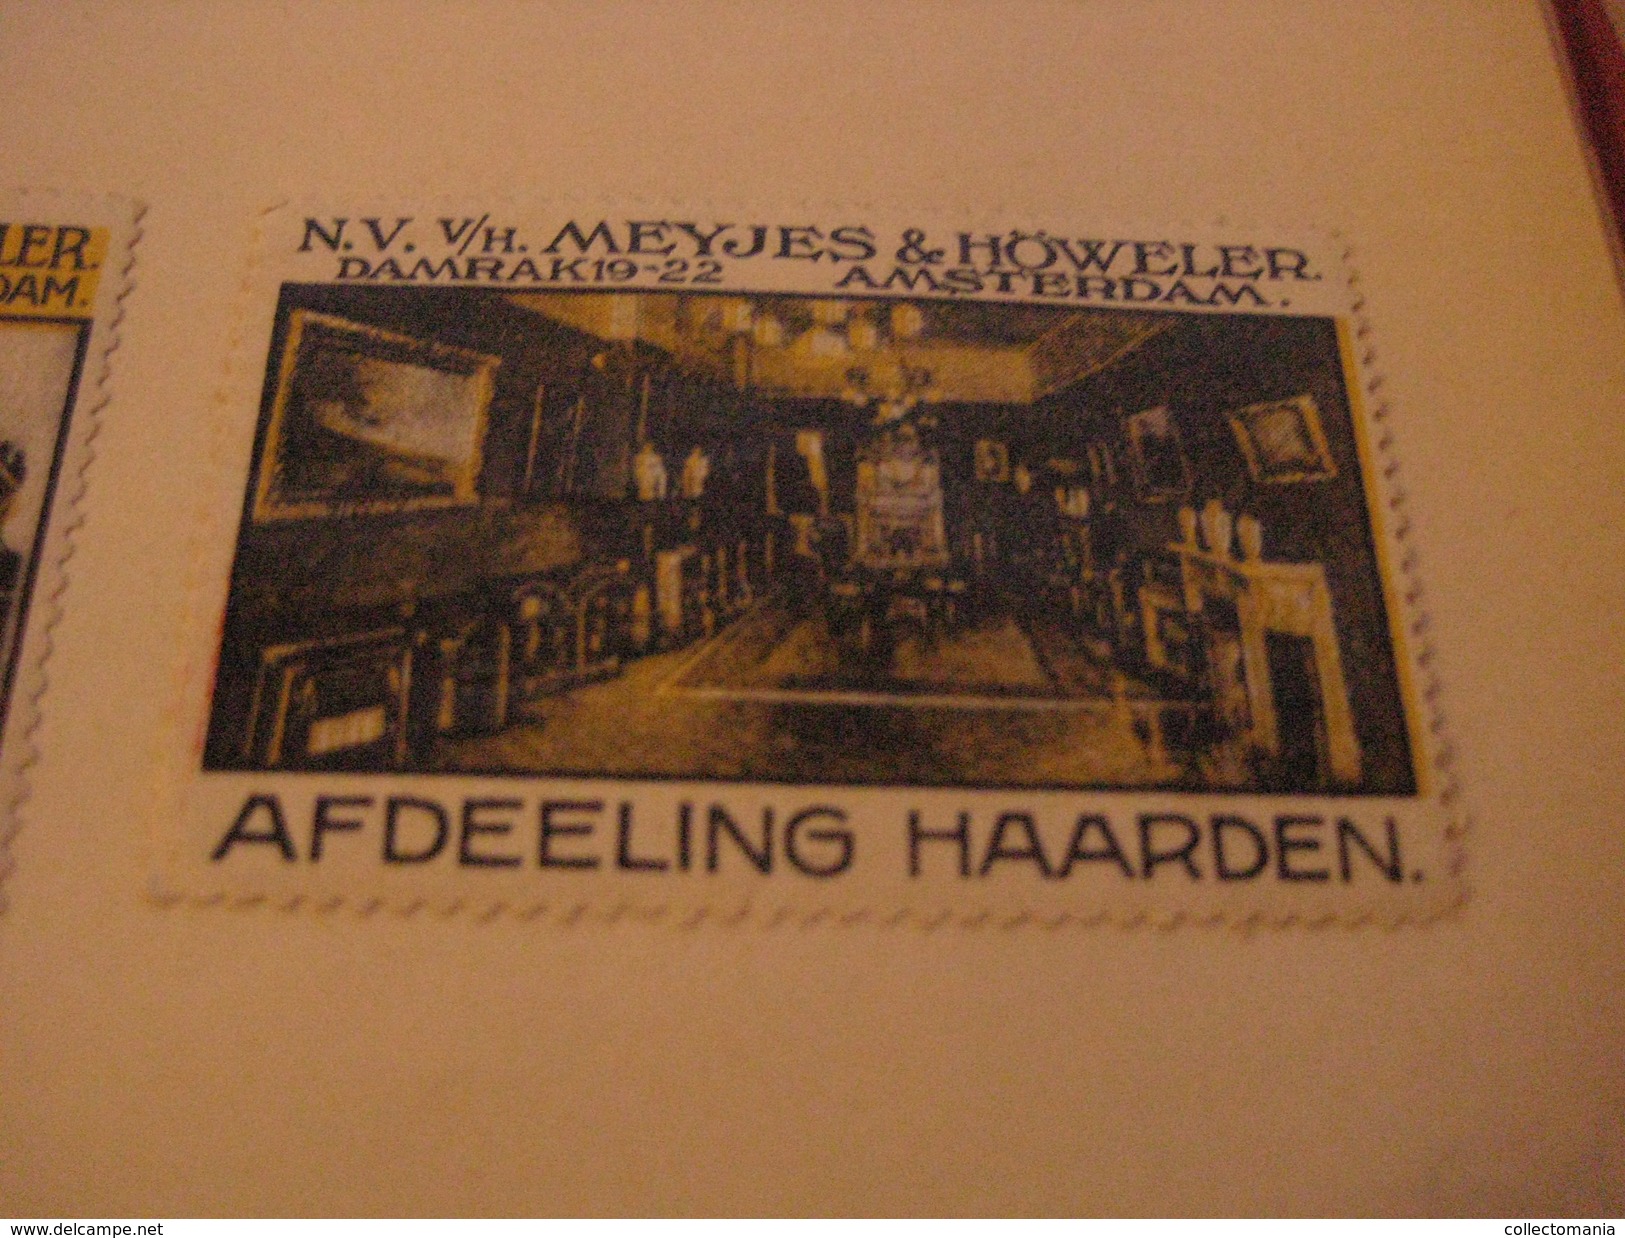 4 Poster Stamp Advertising Litho MEYES HOWELER Amsterdam Damrak Haarden Fornuizen Modelkeuken Nederland   ART - Cinderellas